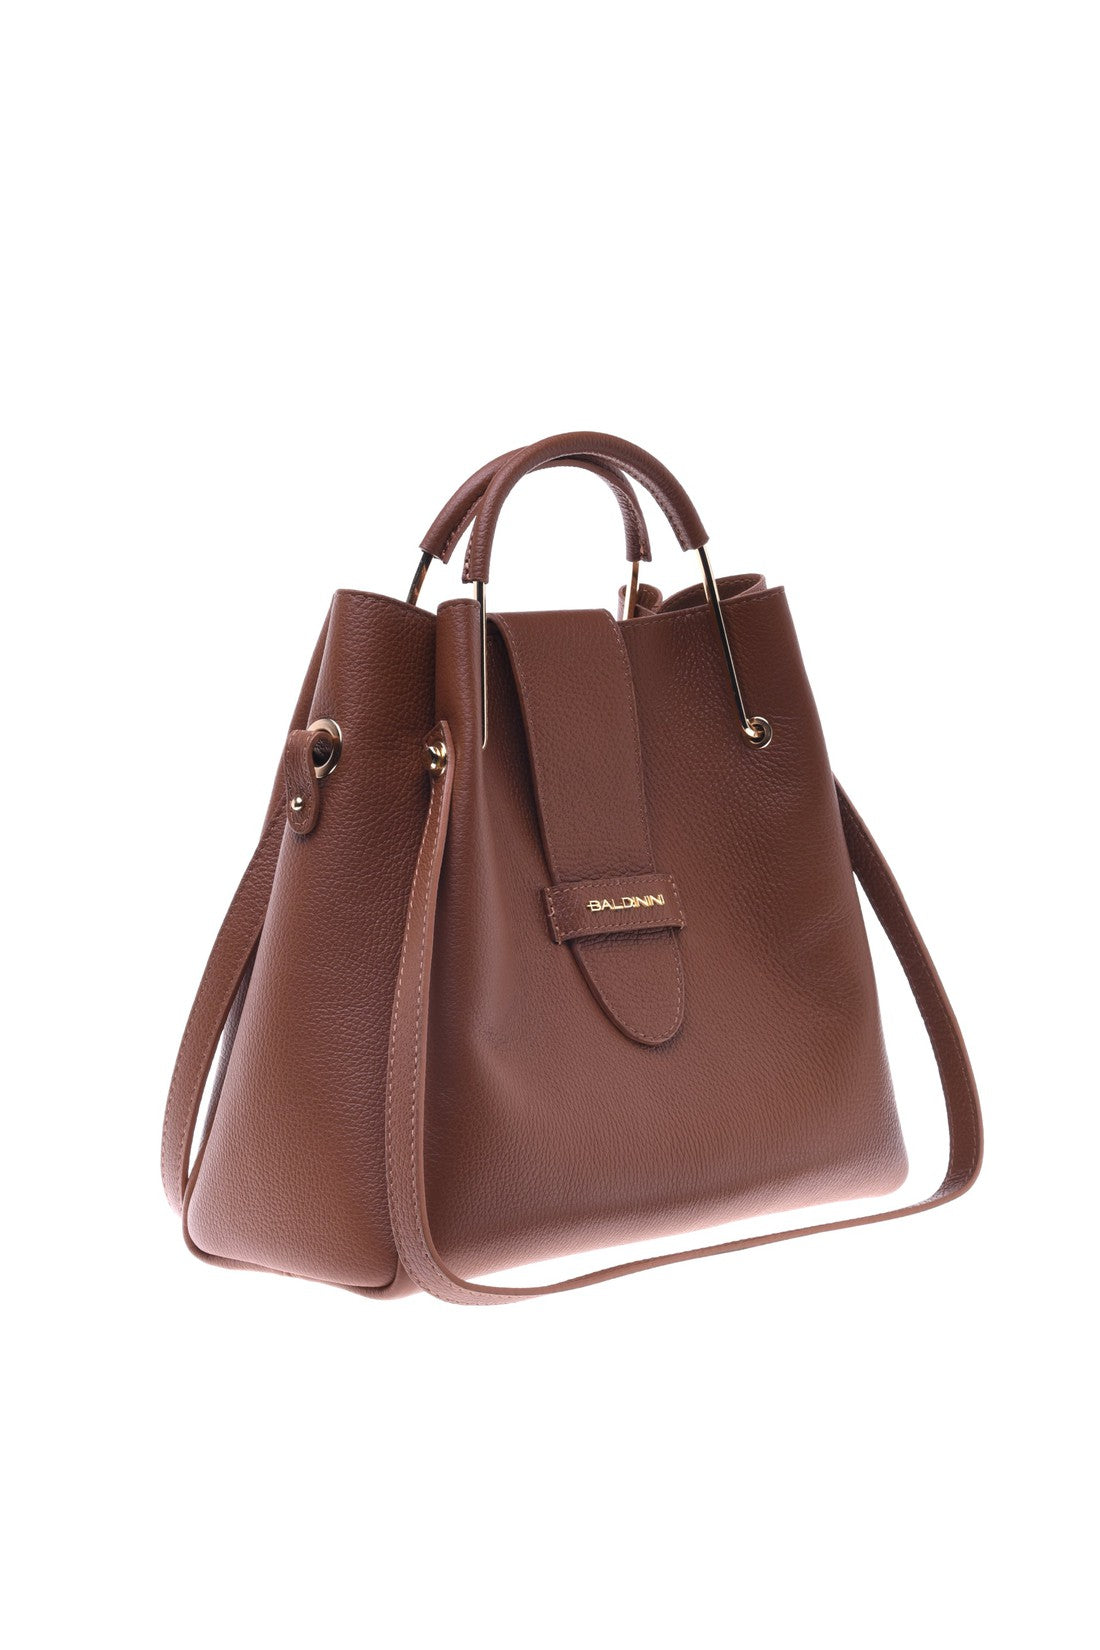 Shoulder bag in tan tumbled leather